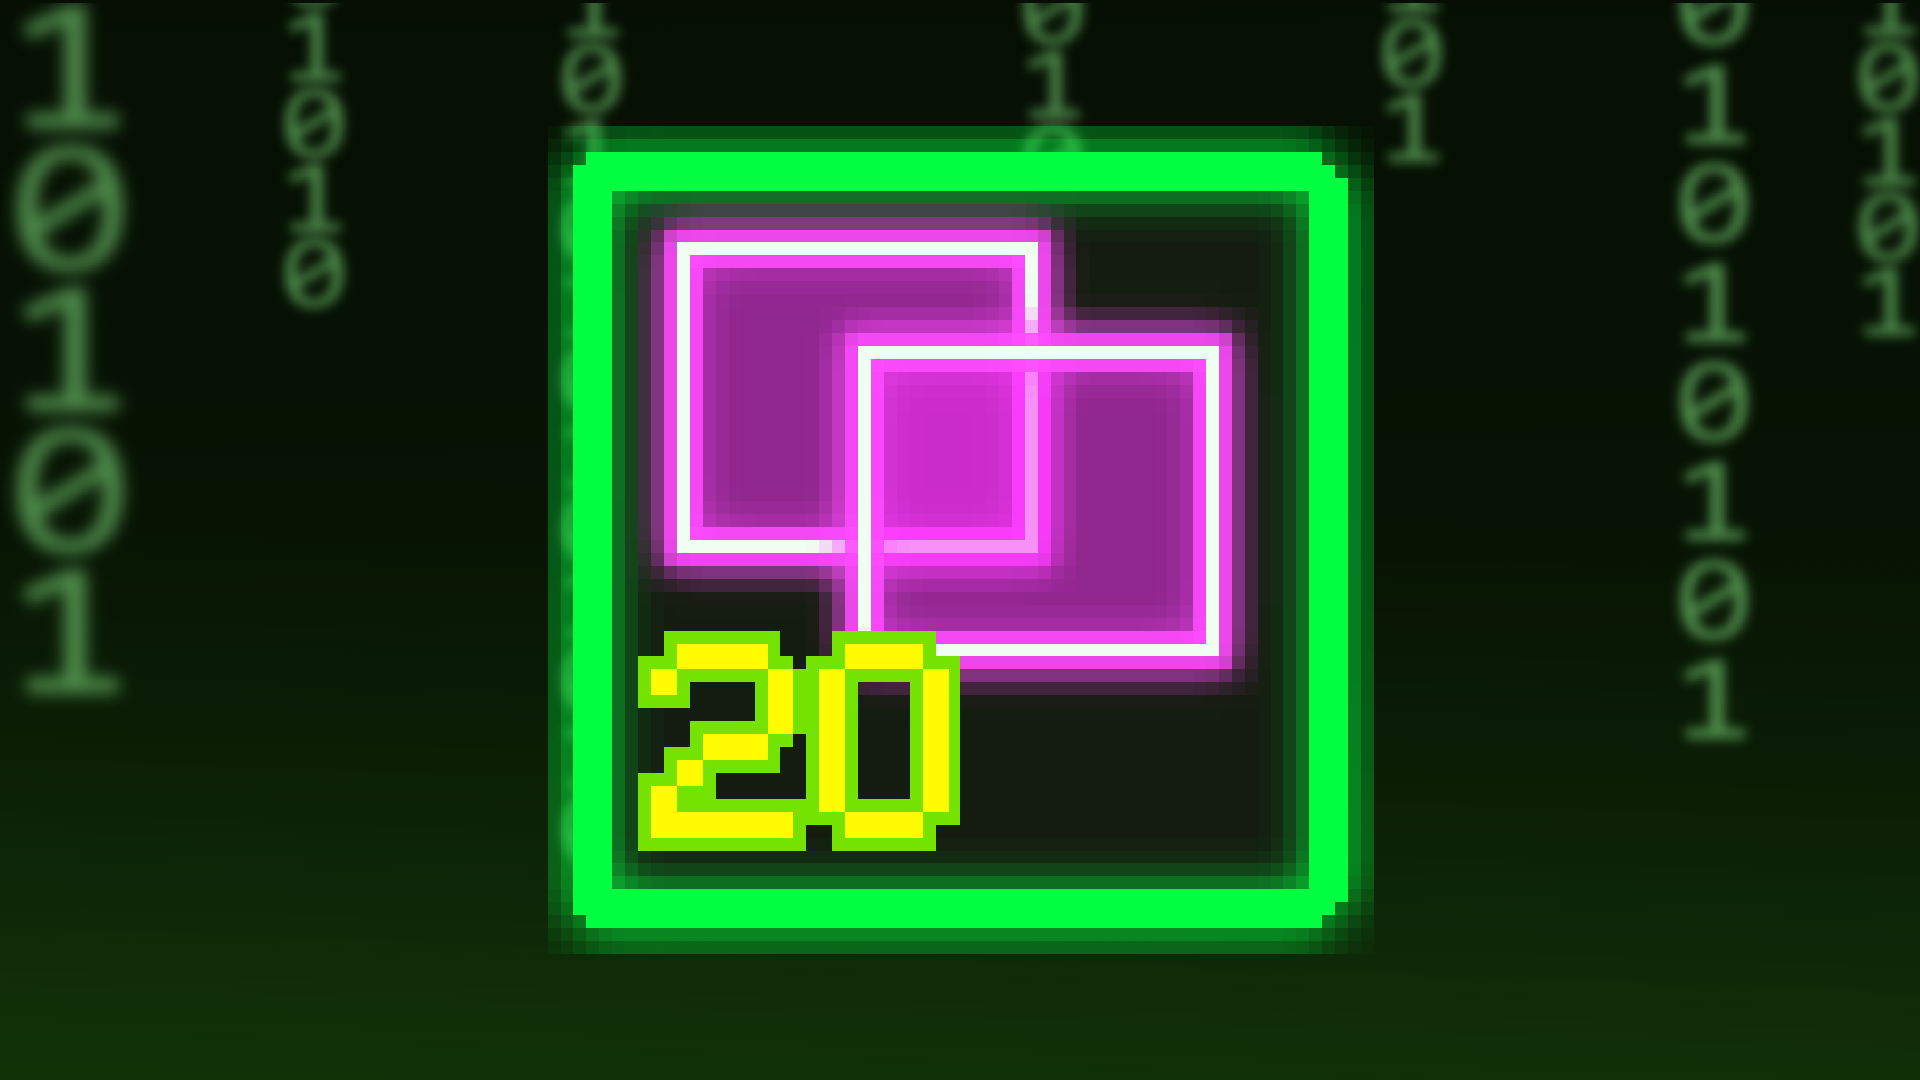 Icon for Killer squares level 2